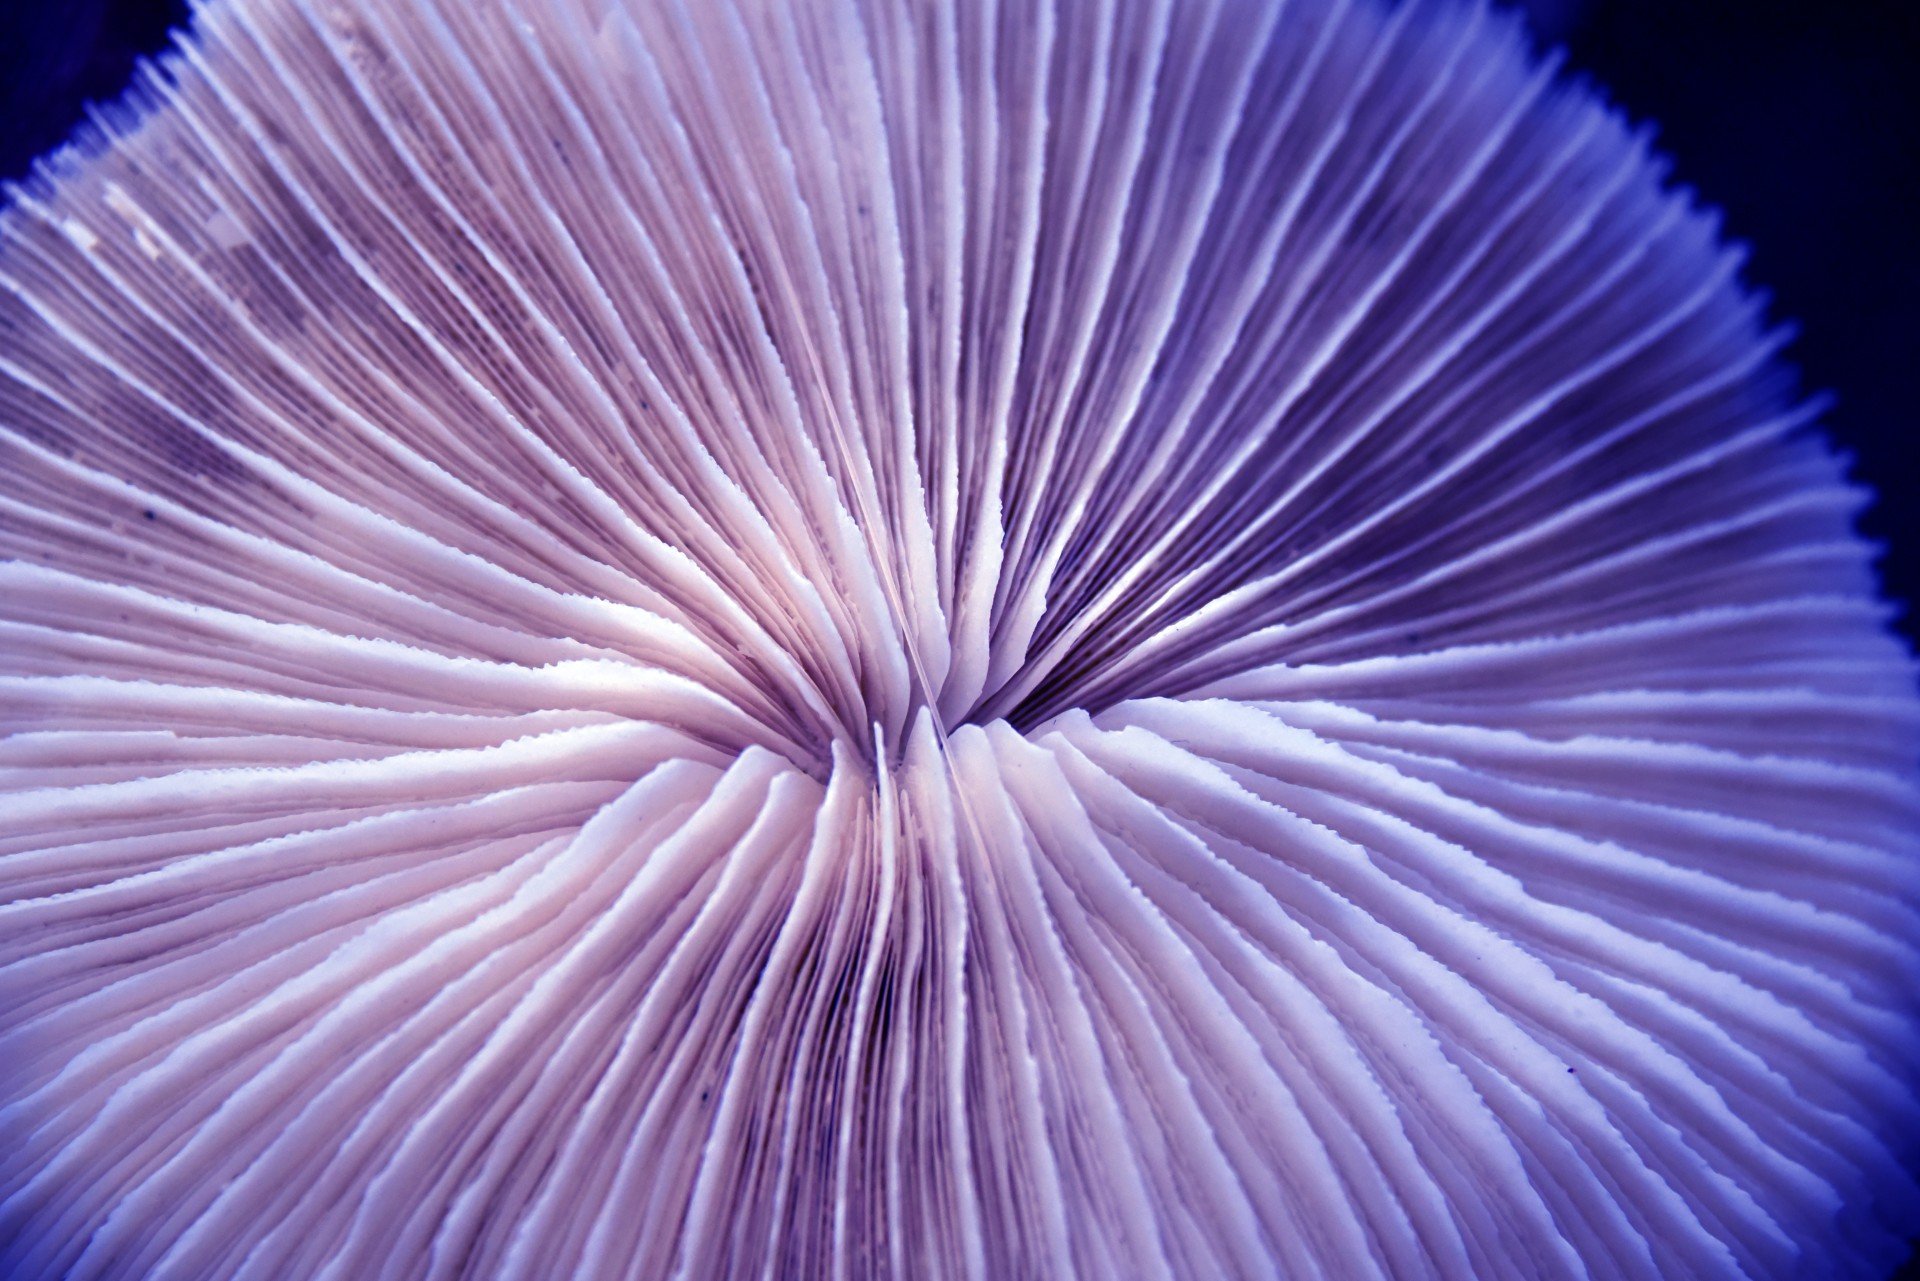 Coral phonk. Пластинчатый коралл. Фиолетовый пластинчатый коралл. Розовый коралл. Текстура кораллов.